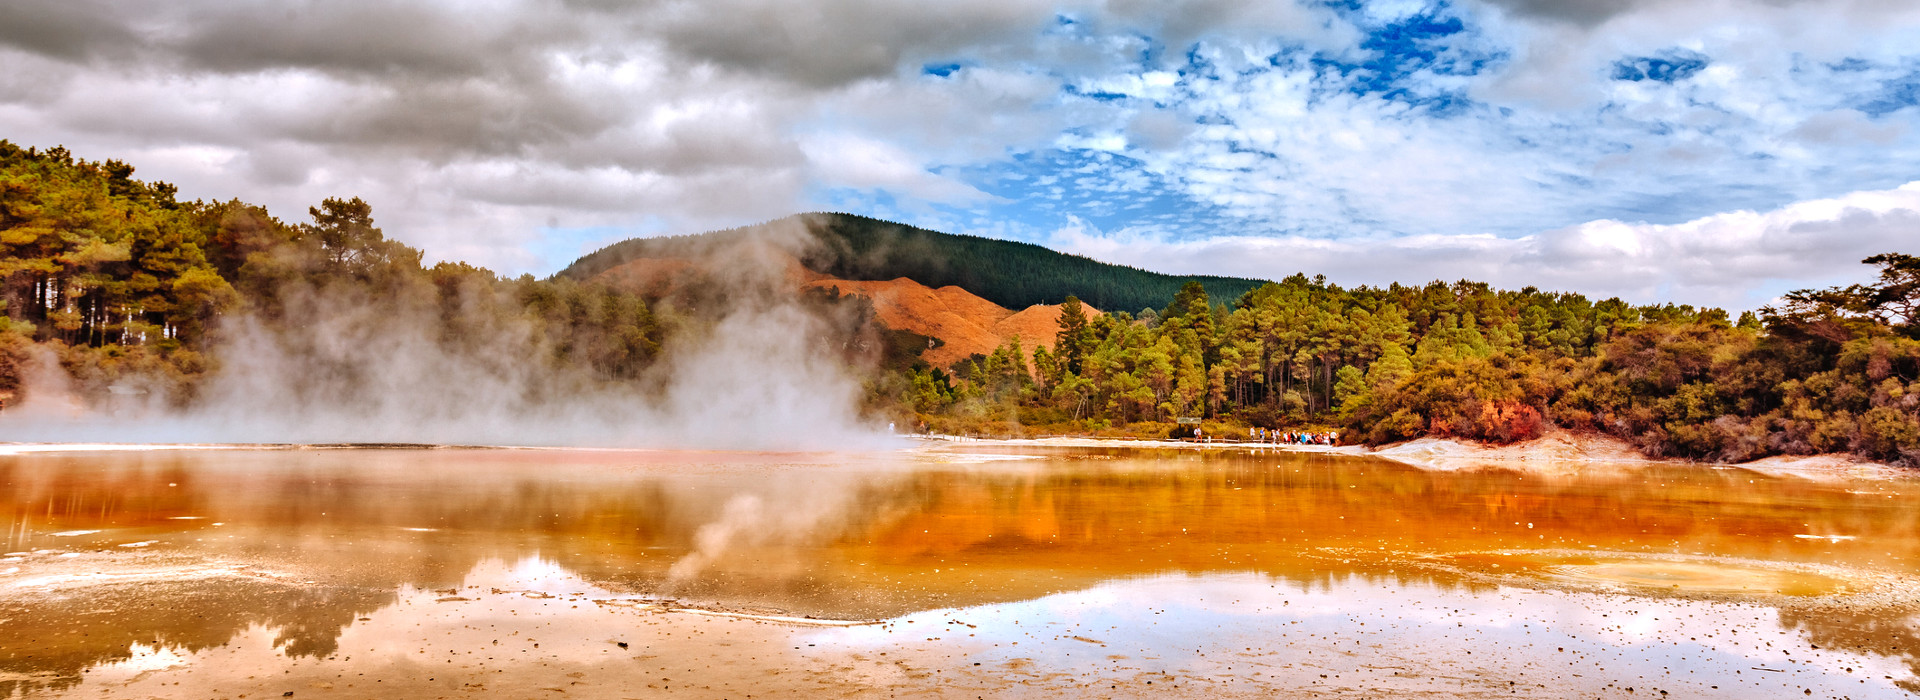 Rotorua champagne pool at Wai-O-Tapu geothermal park landscape